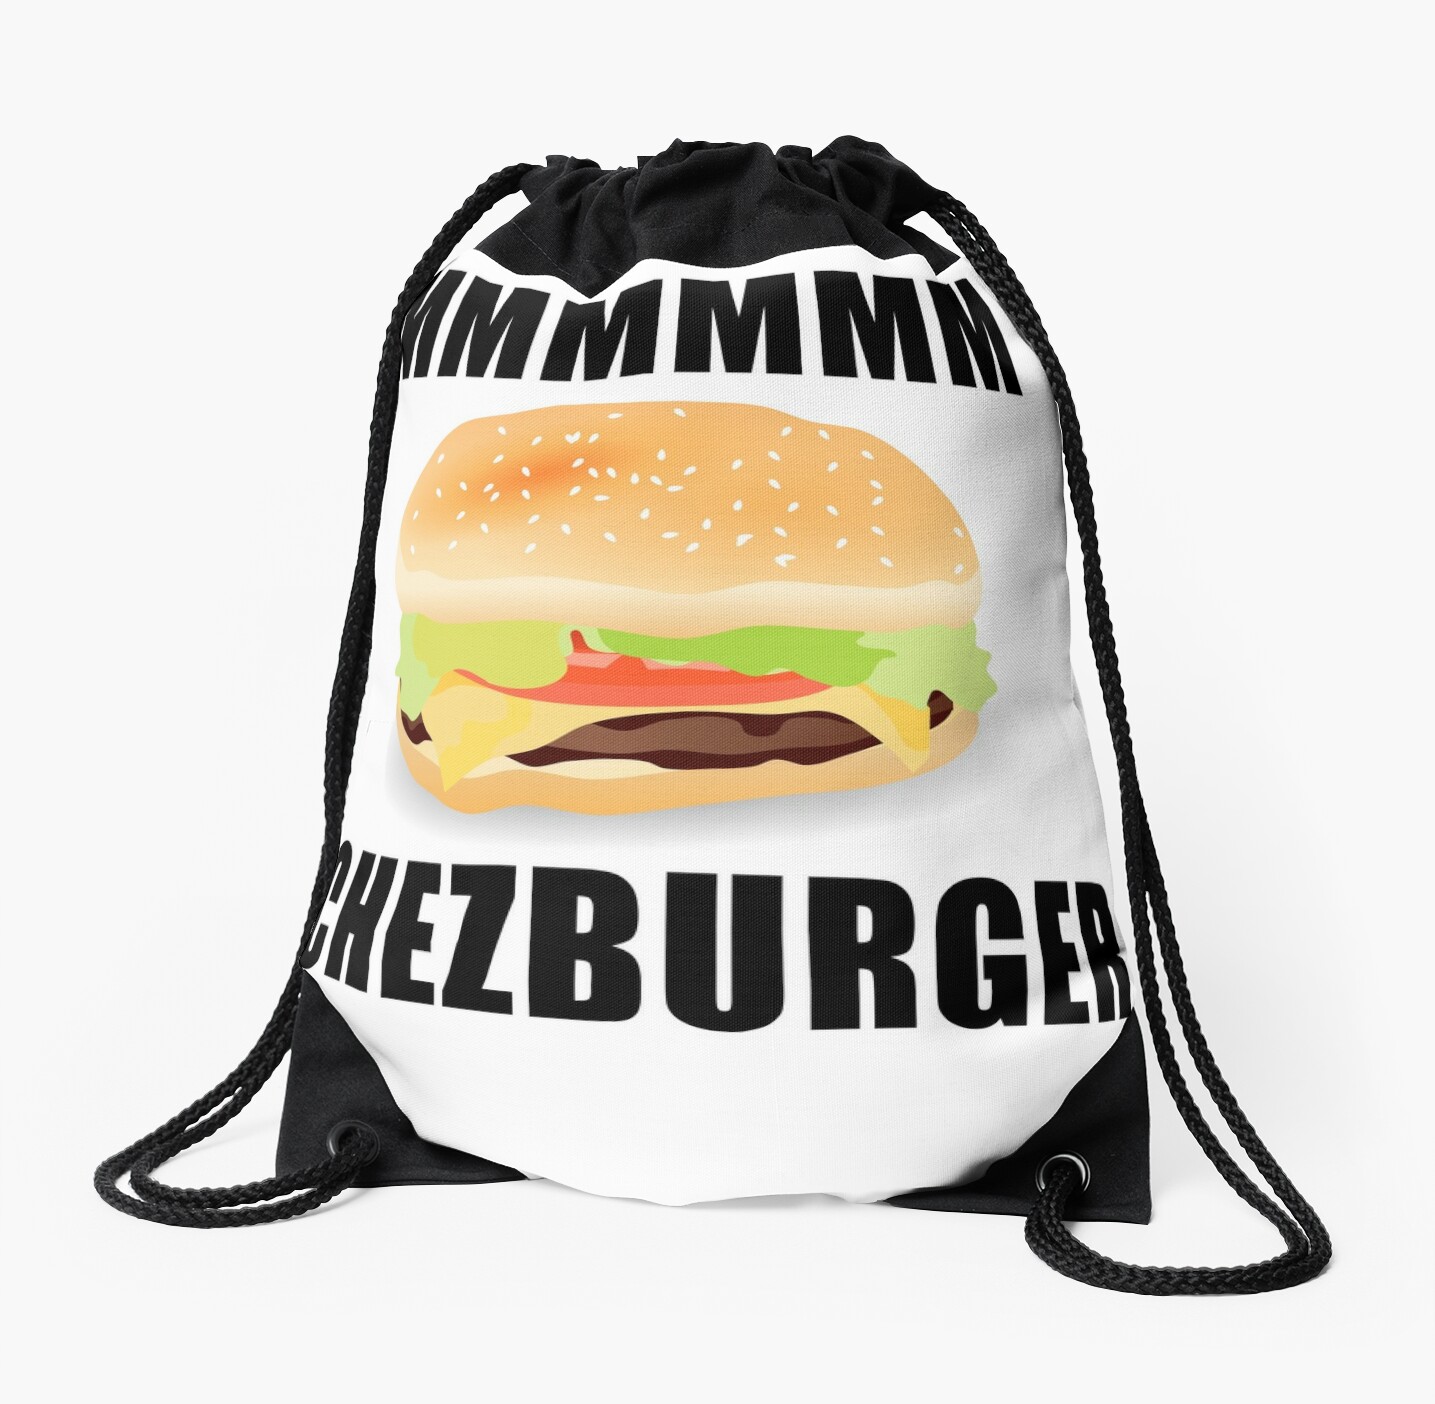 Roblox Mmm Chezburger Drawstring Bag By Jenr8d Designs Redbubble - roblox mmm chezburger baby one piece by jenr8d designs redbubble